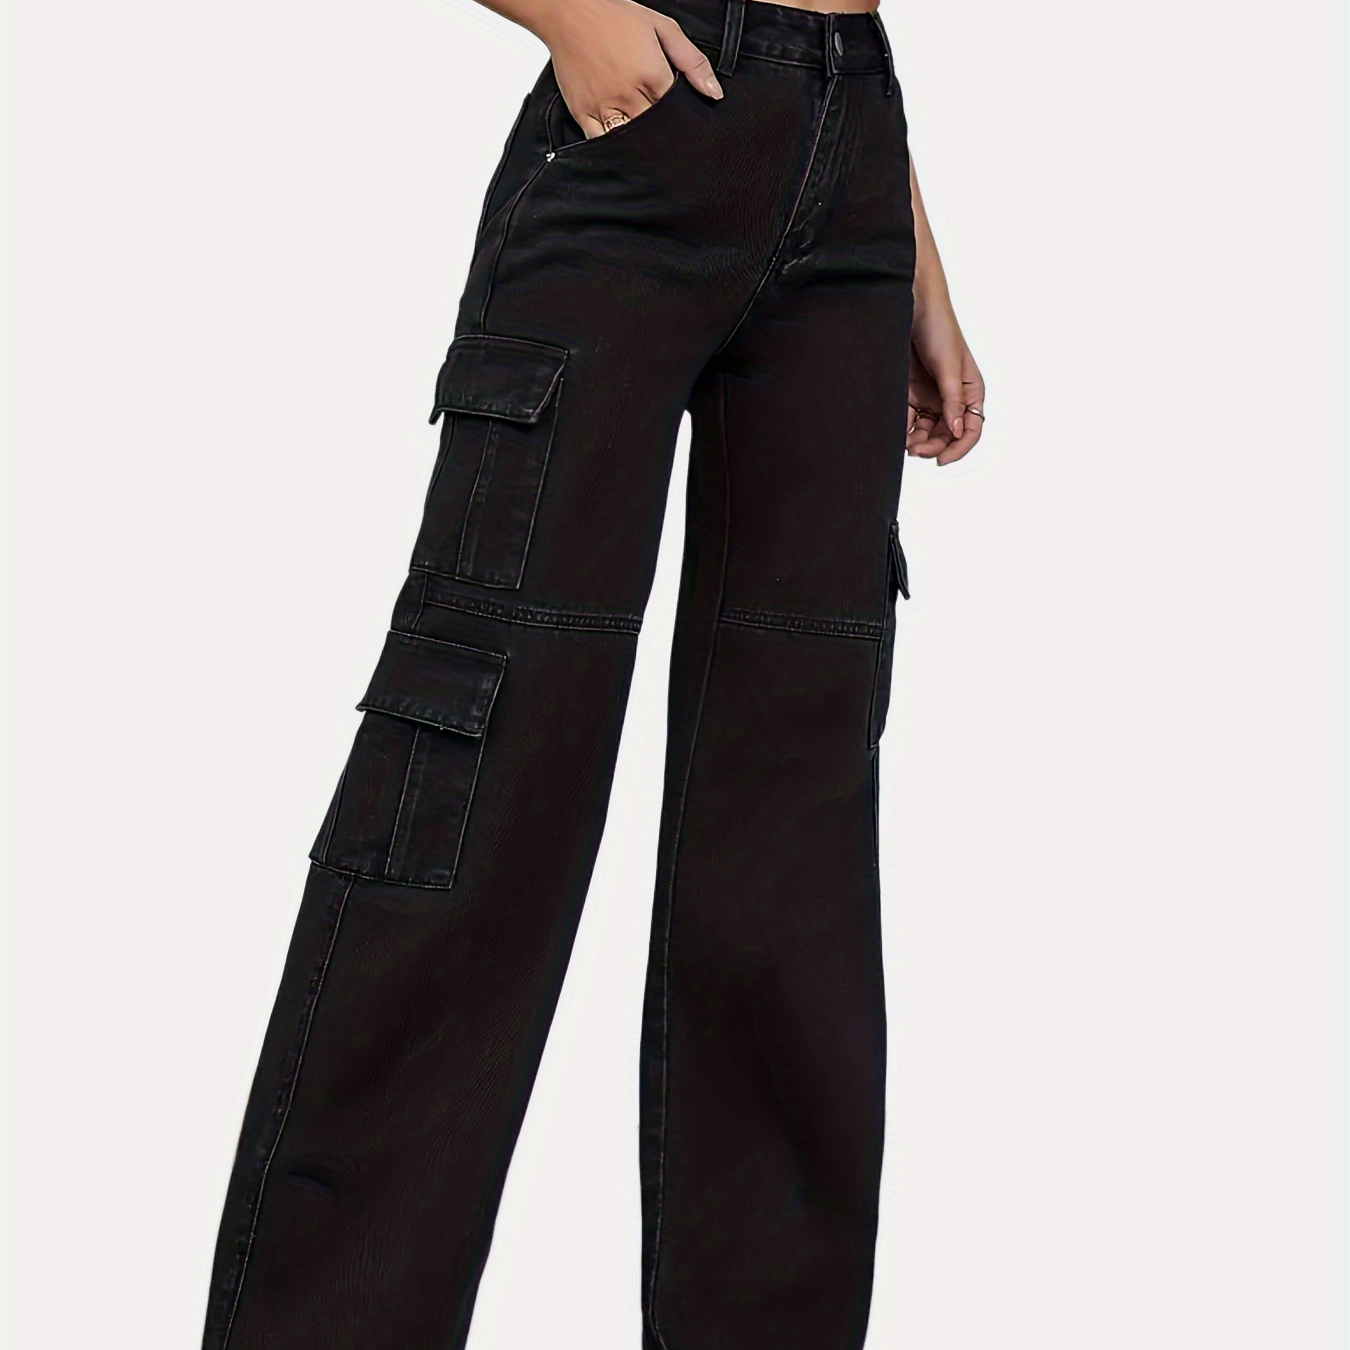 「binfenxie」Flap Side Pocket Black High Waist Denim Pants, Cargo Pocket Casual Wide Leg Jeans, Stylish & Trendy, Women's Denim Jeans & Clothing